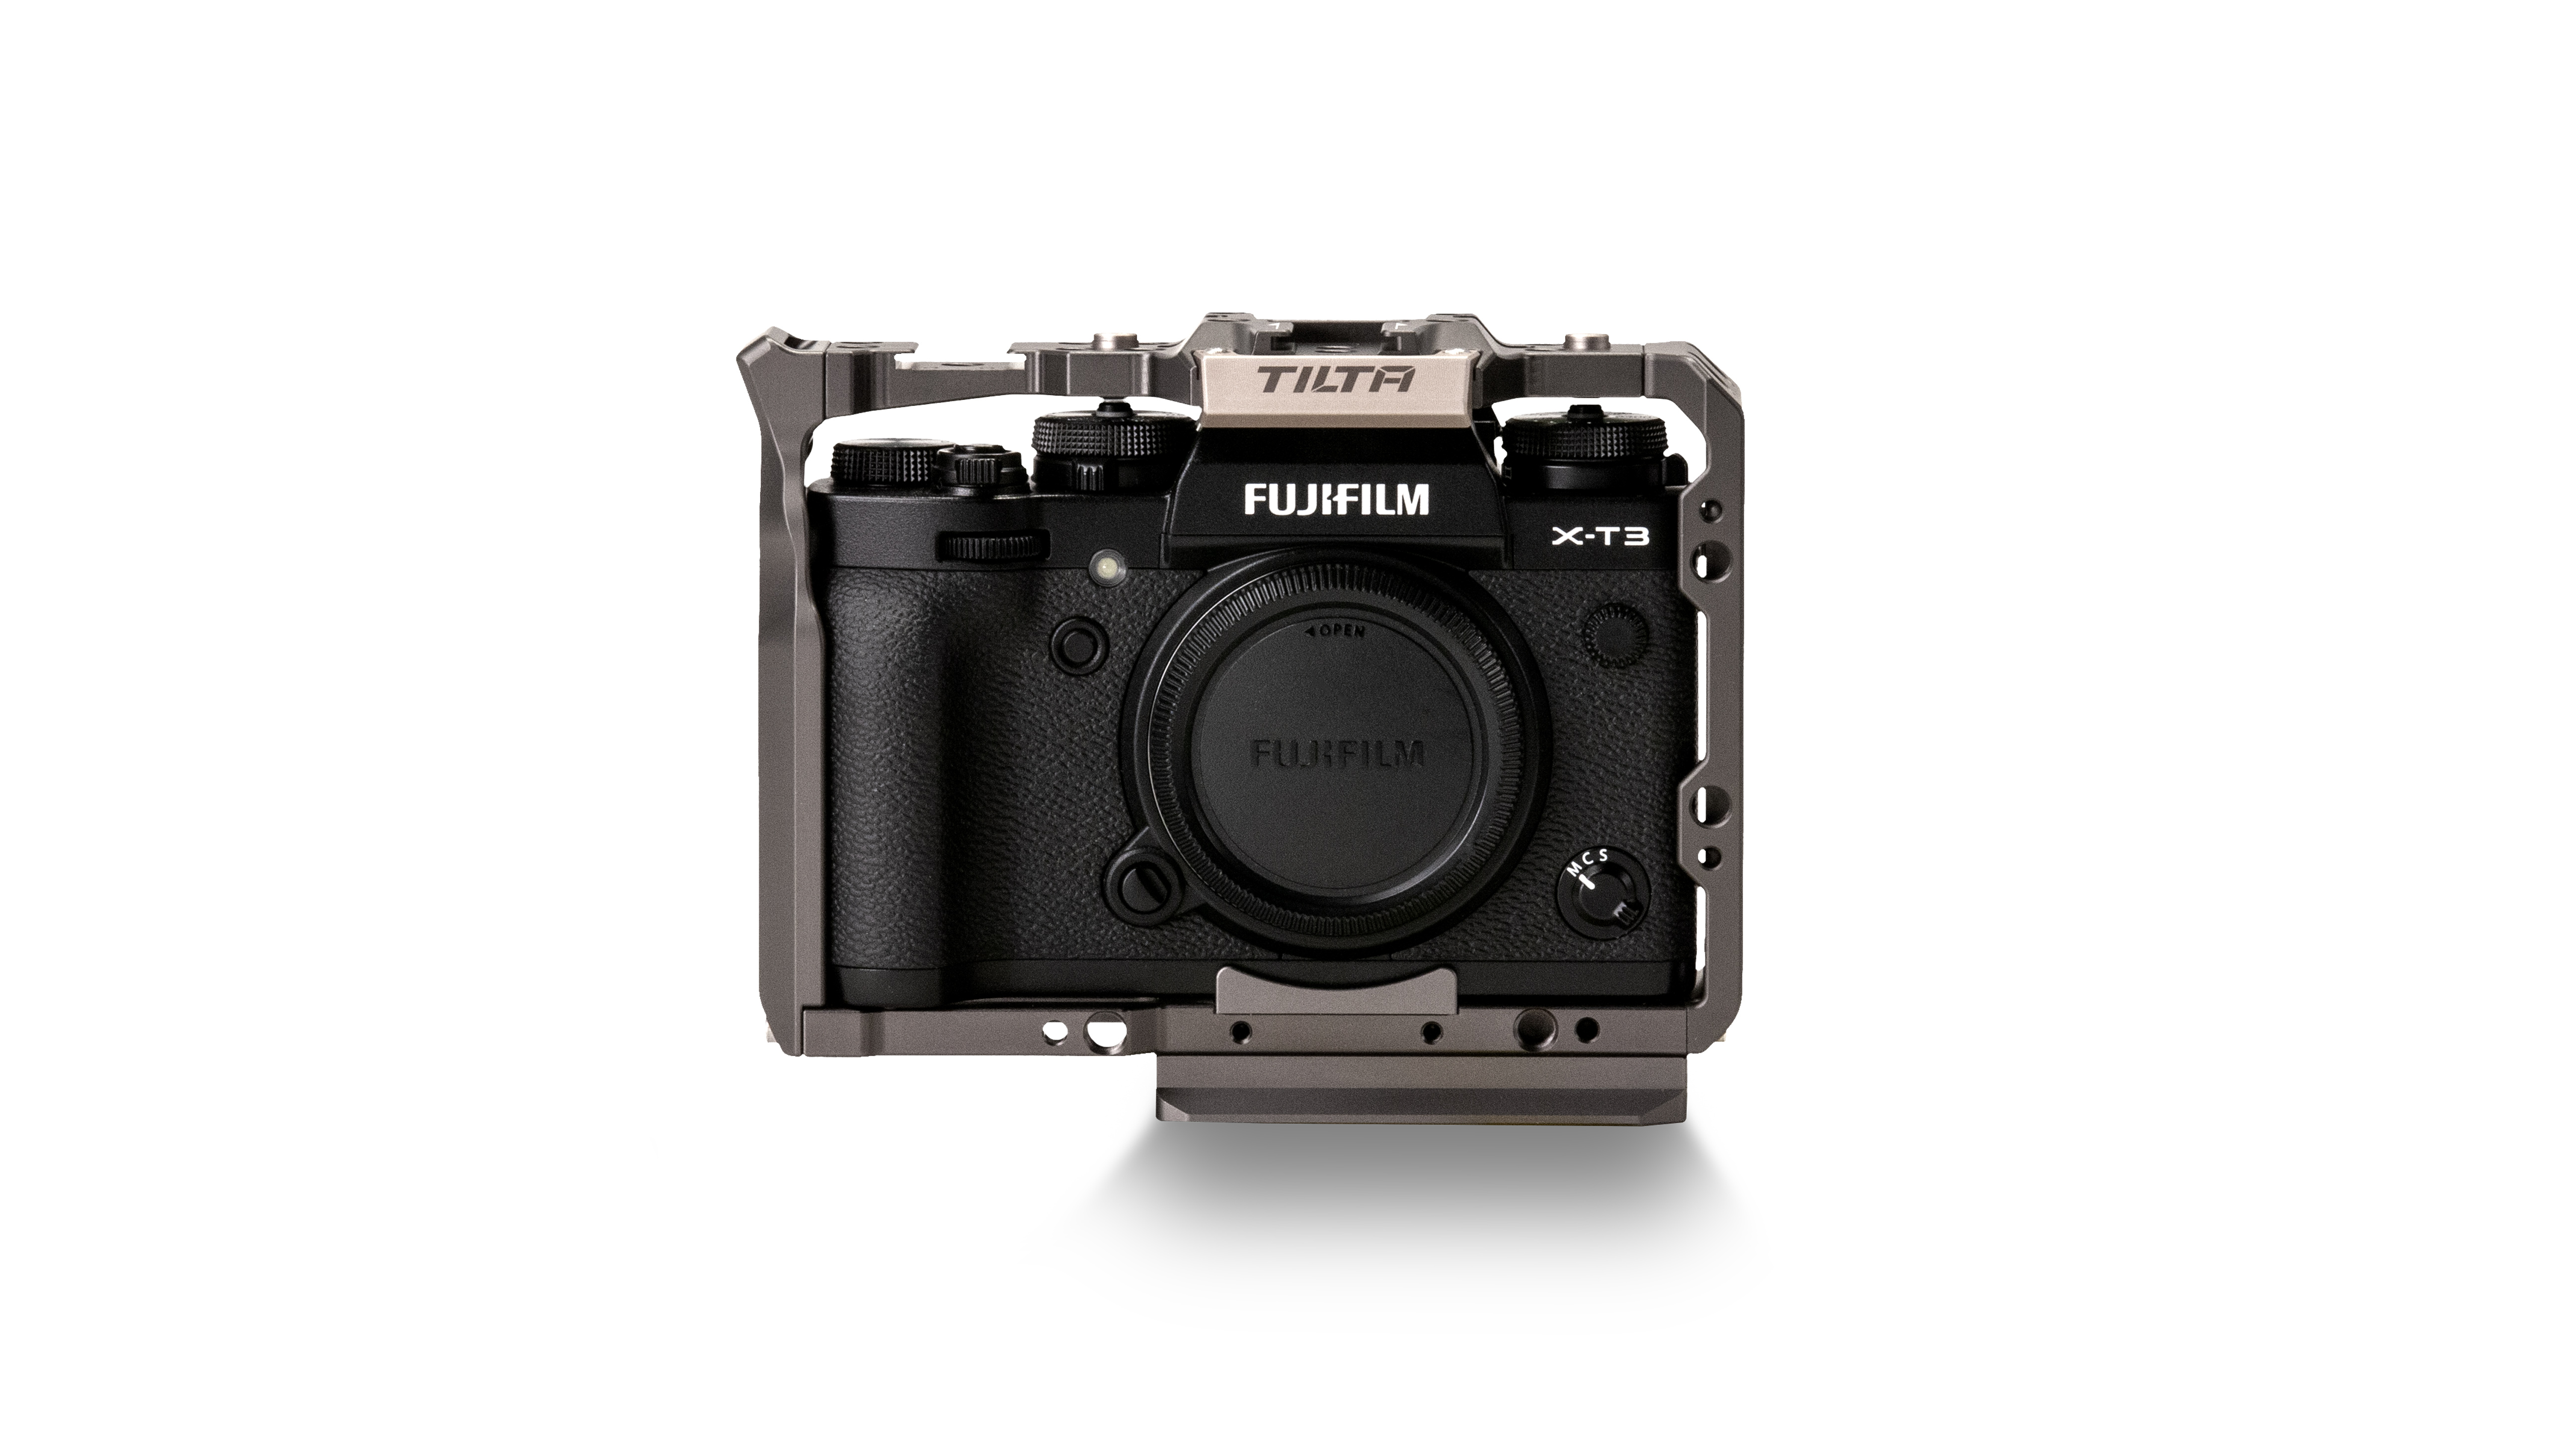 Moskee Sturen astronaut Full Camera Cage for Fujifilm X-T3 | Tilta